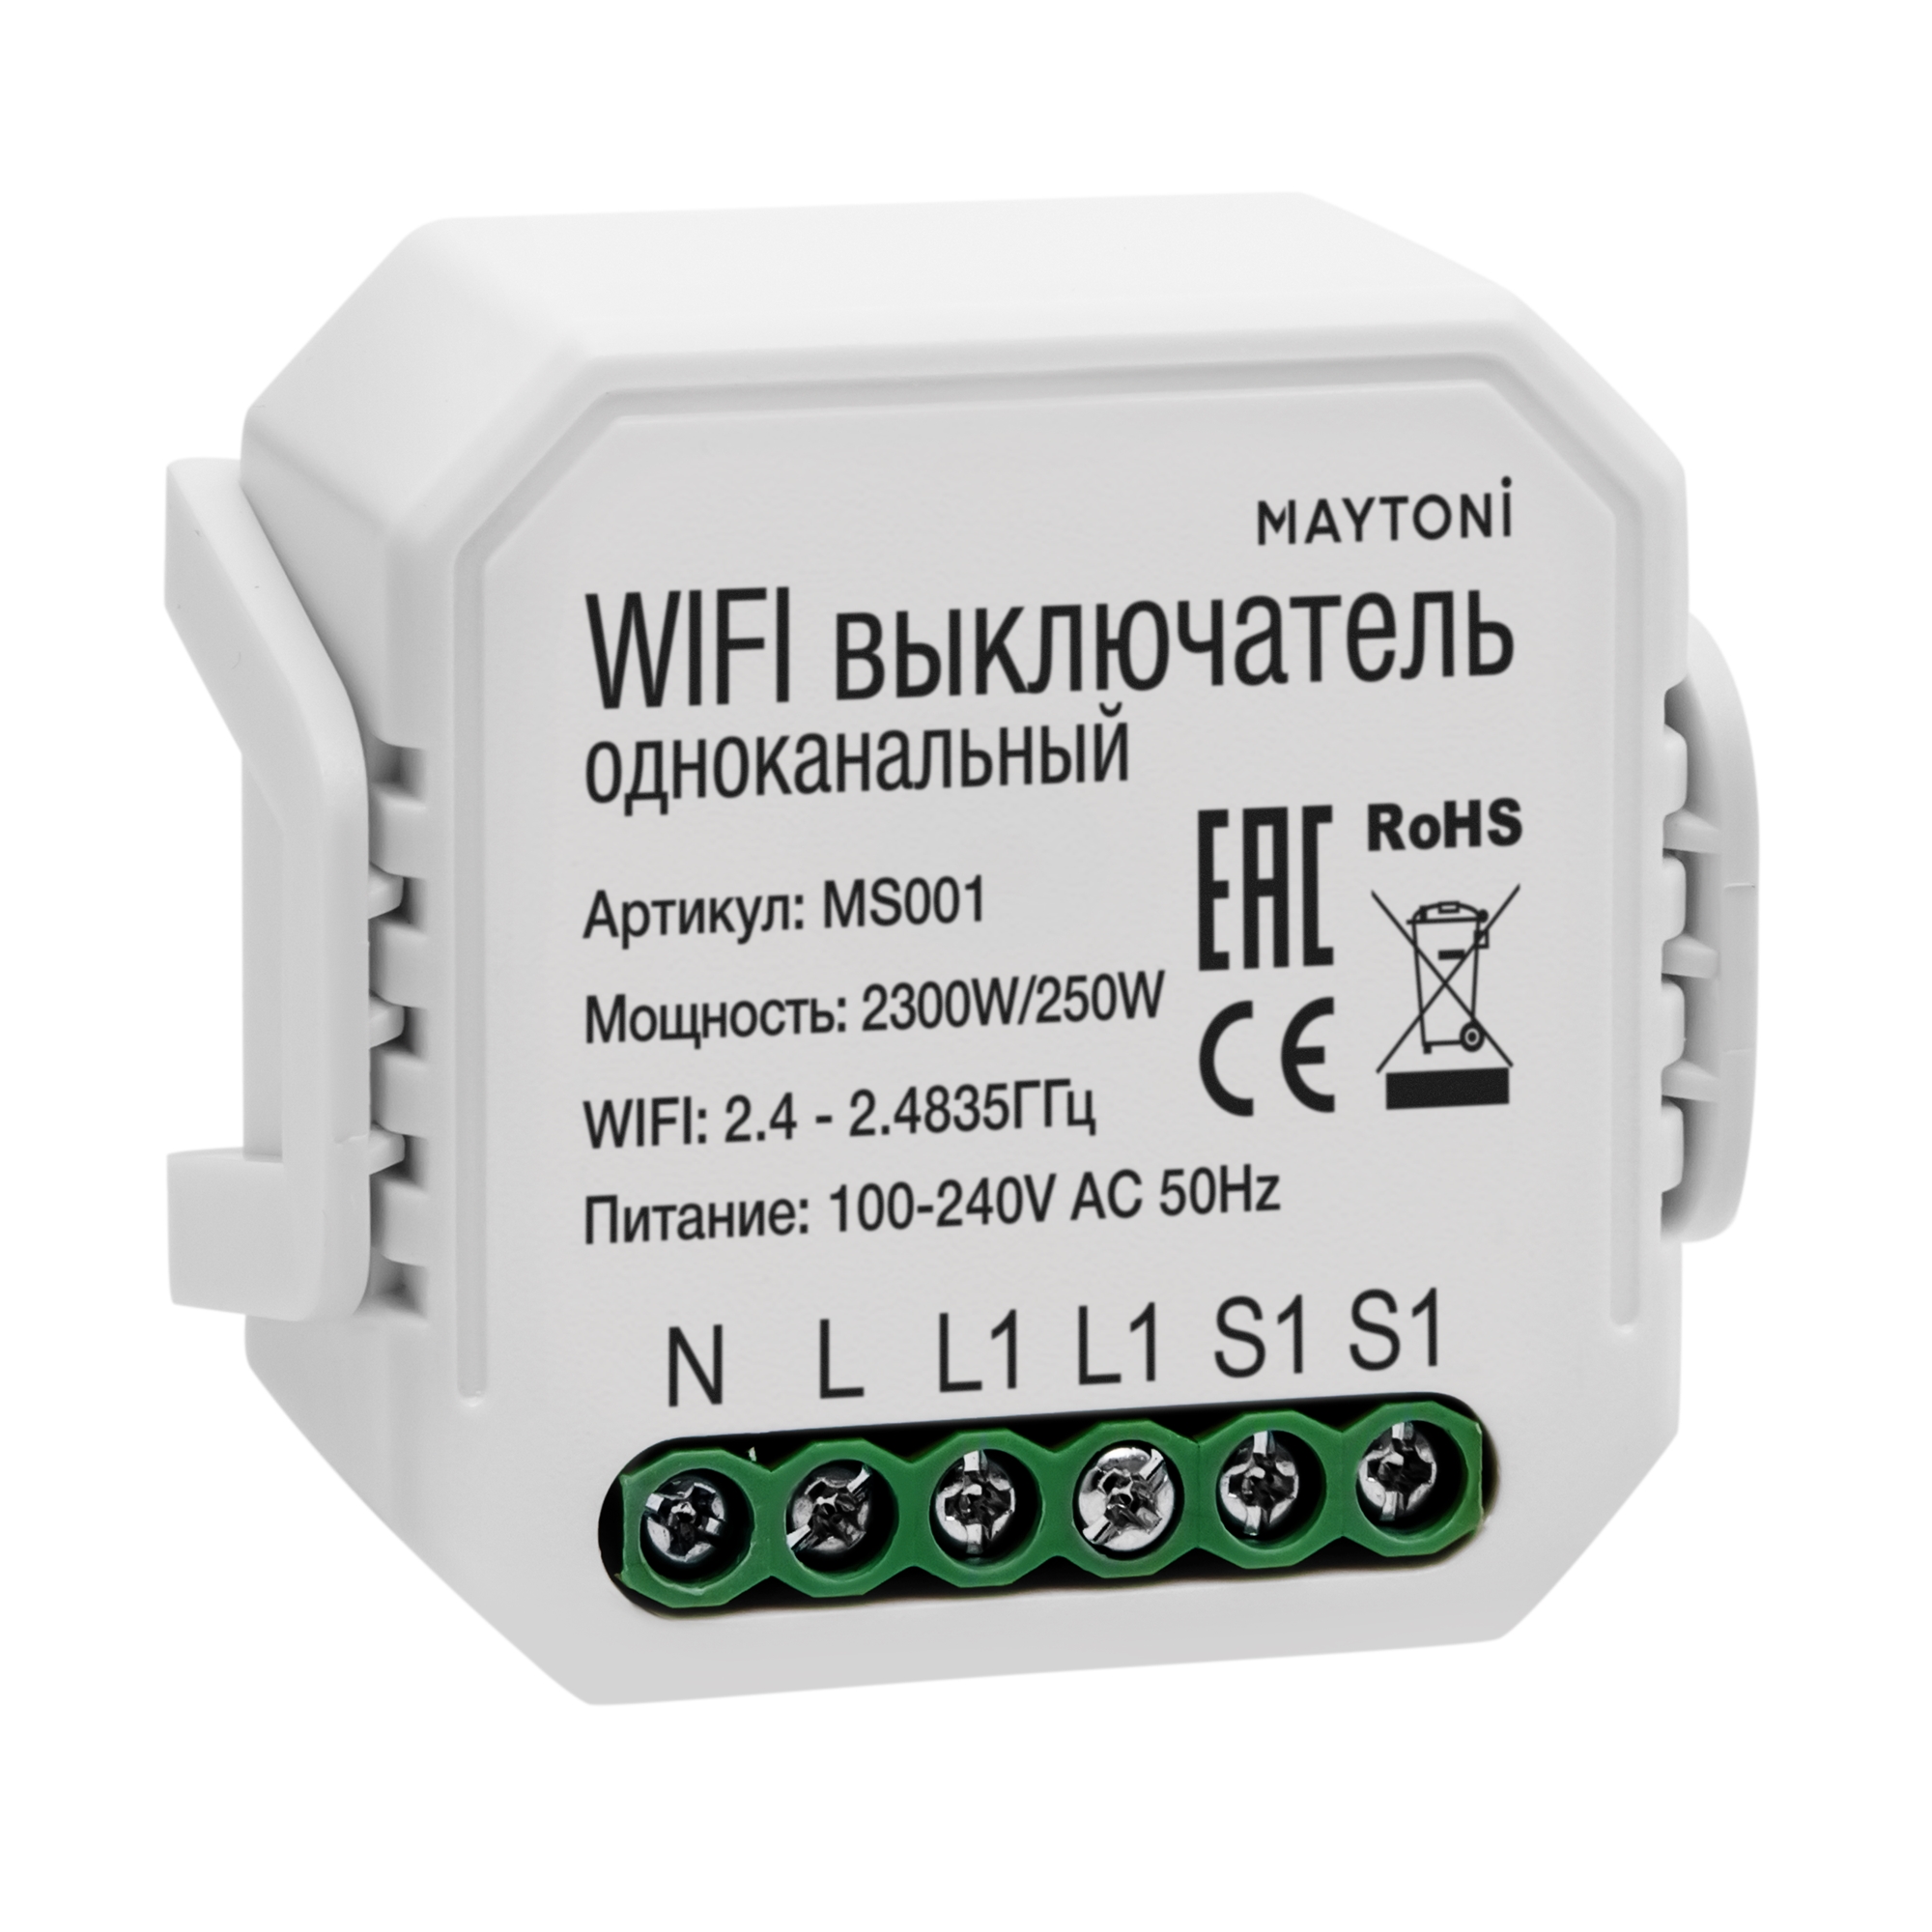 WI-FI выключатель одноканальный Technical MS001 varon technical ① ⑦lite household ma chine air 0xygen bar sleep